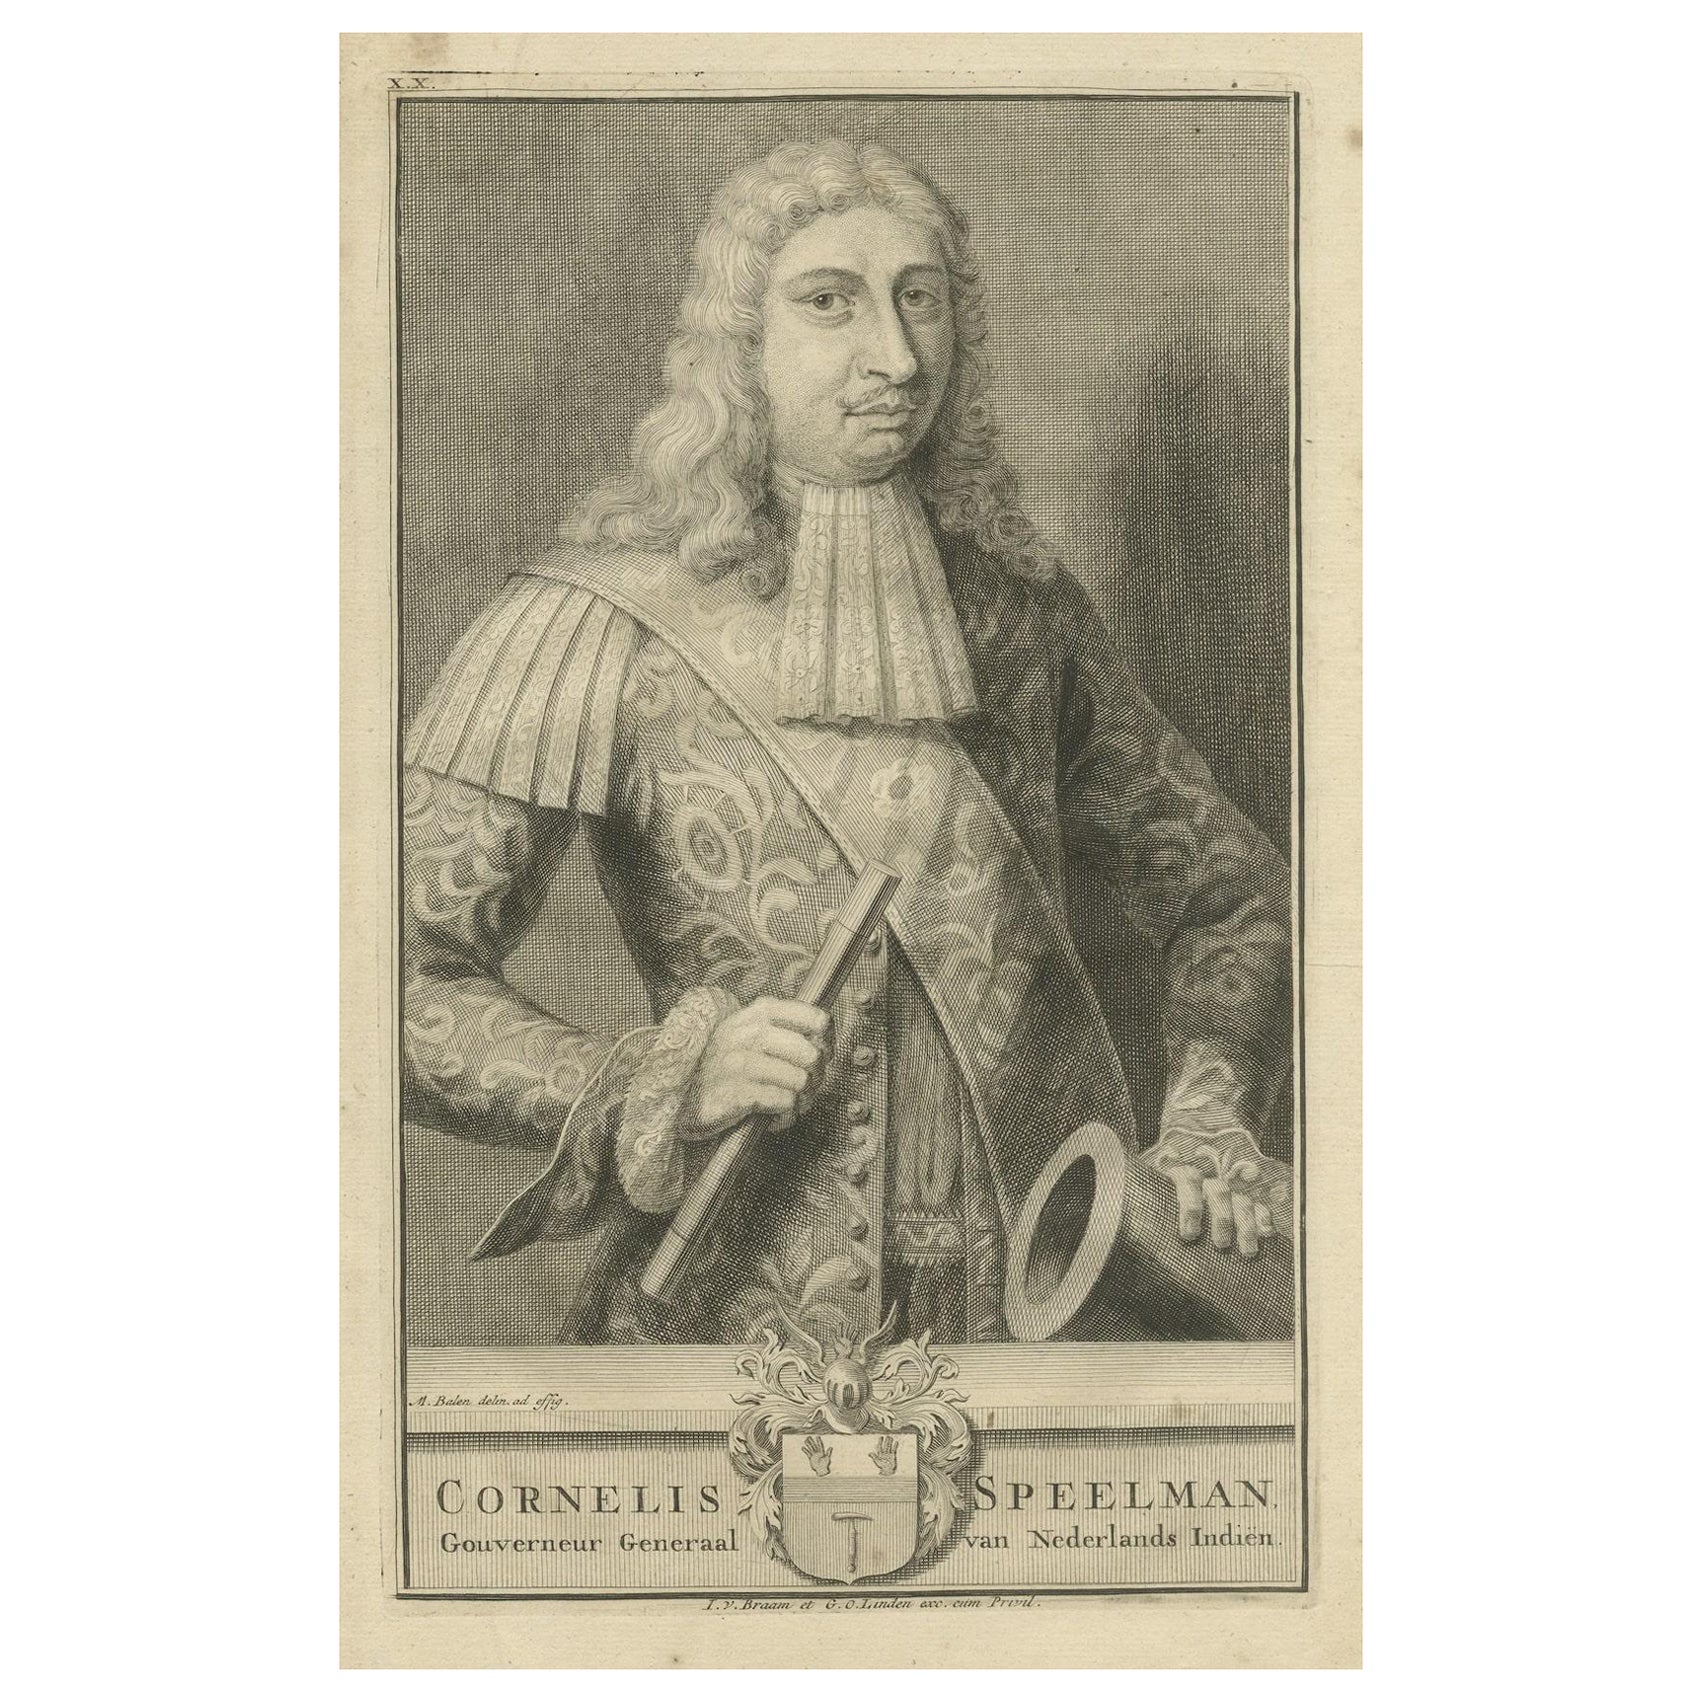 Cornelis Speelman: Commanding Governor-General of the VOC, Dutch East Indies For Sale